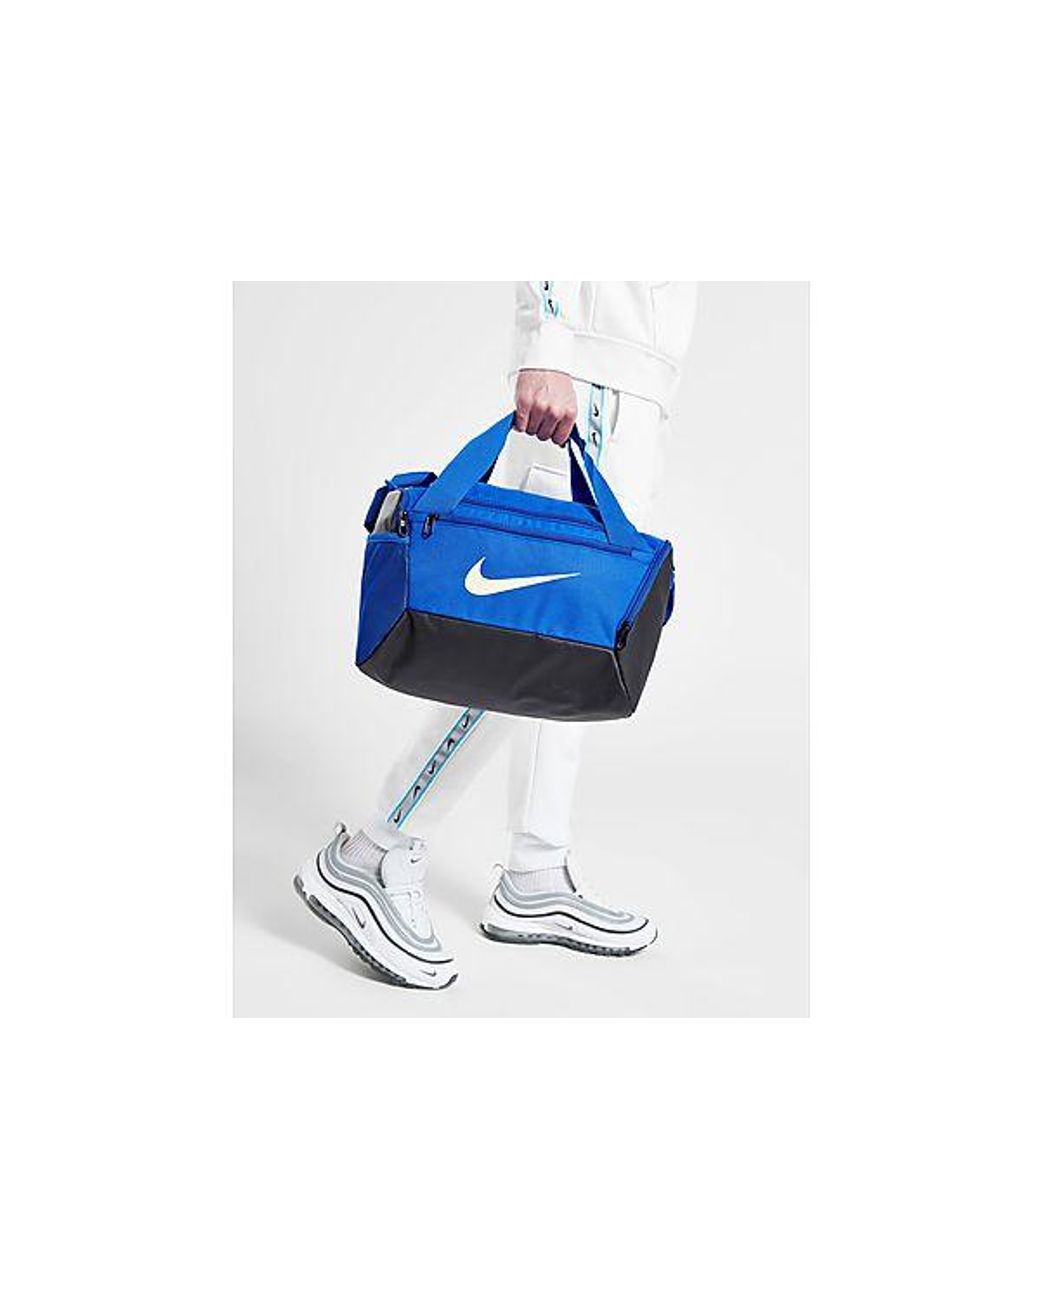 Nike Brasilia Extra Small Duffel Bag in Blue